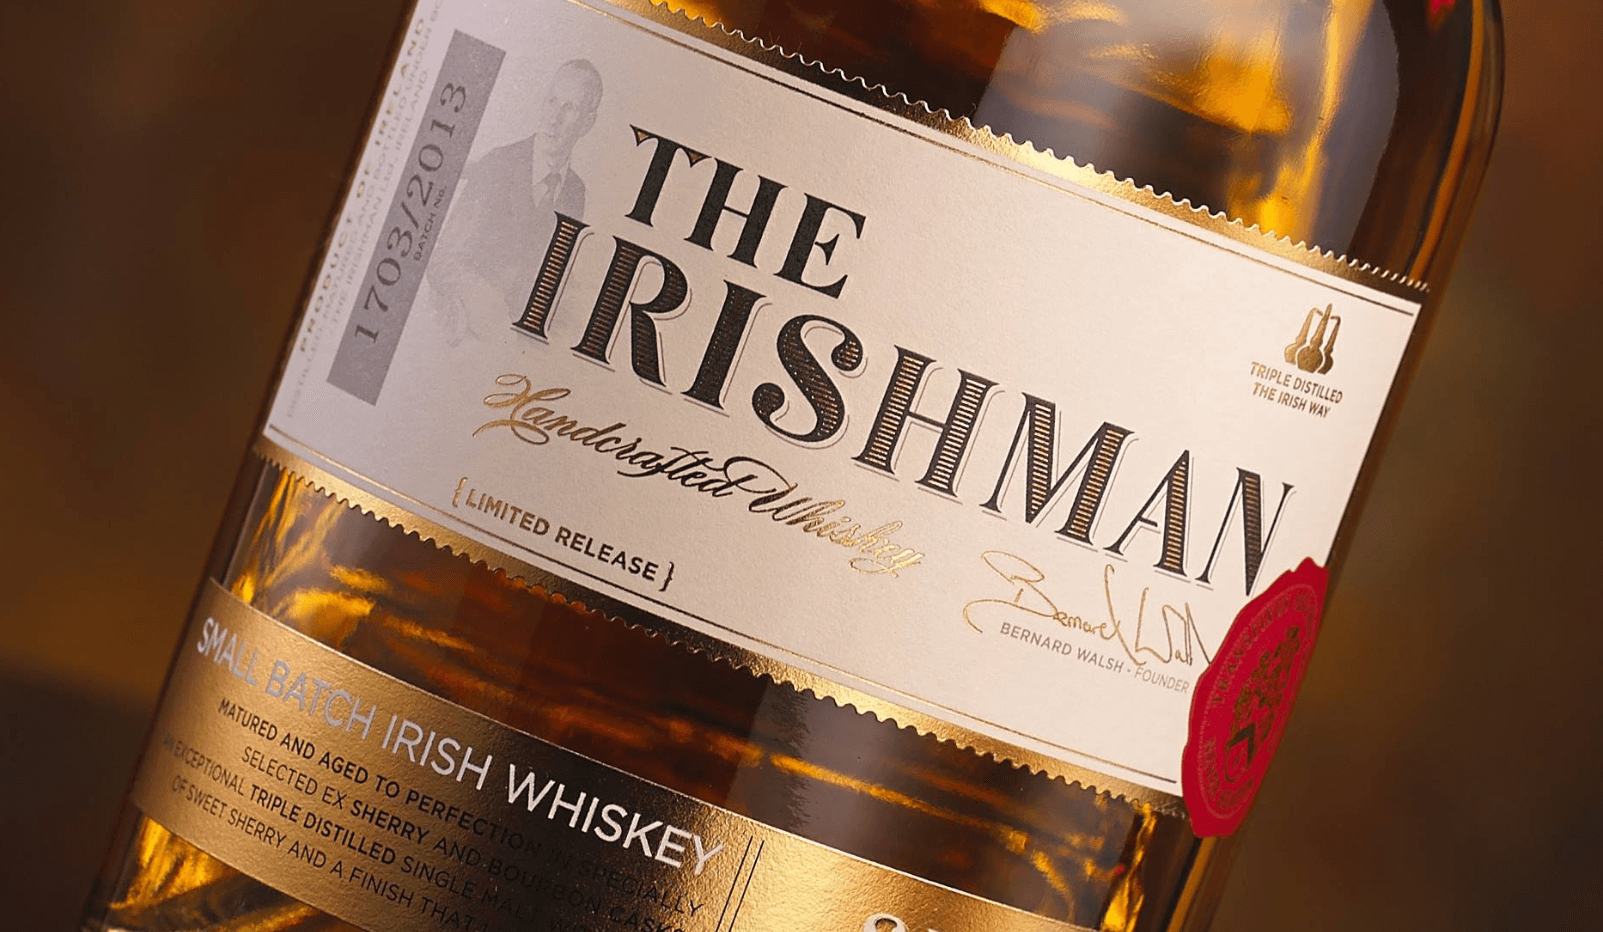 Amber Beverage Group expands into Irish whiskey acquiring Walsh Whiskey